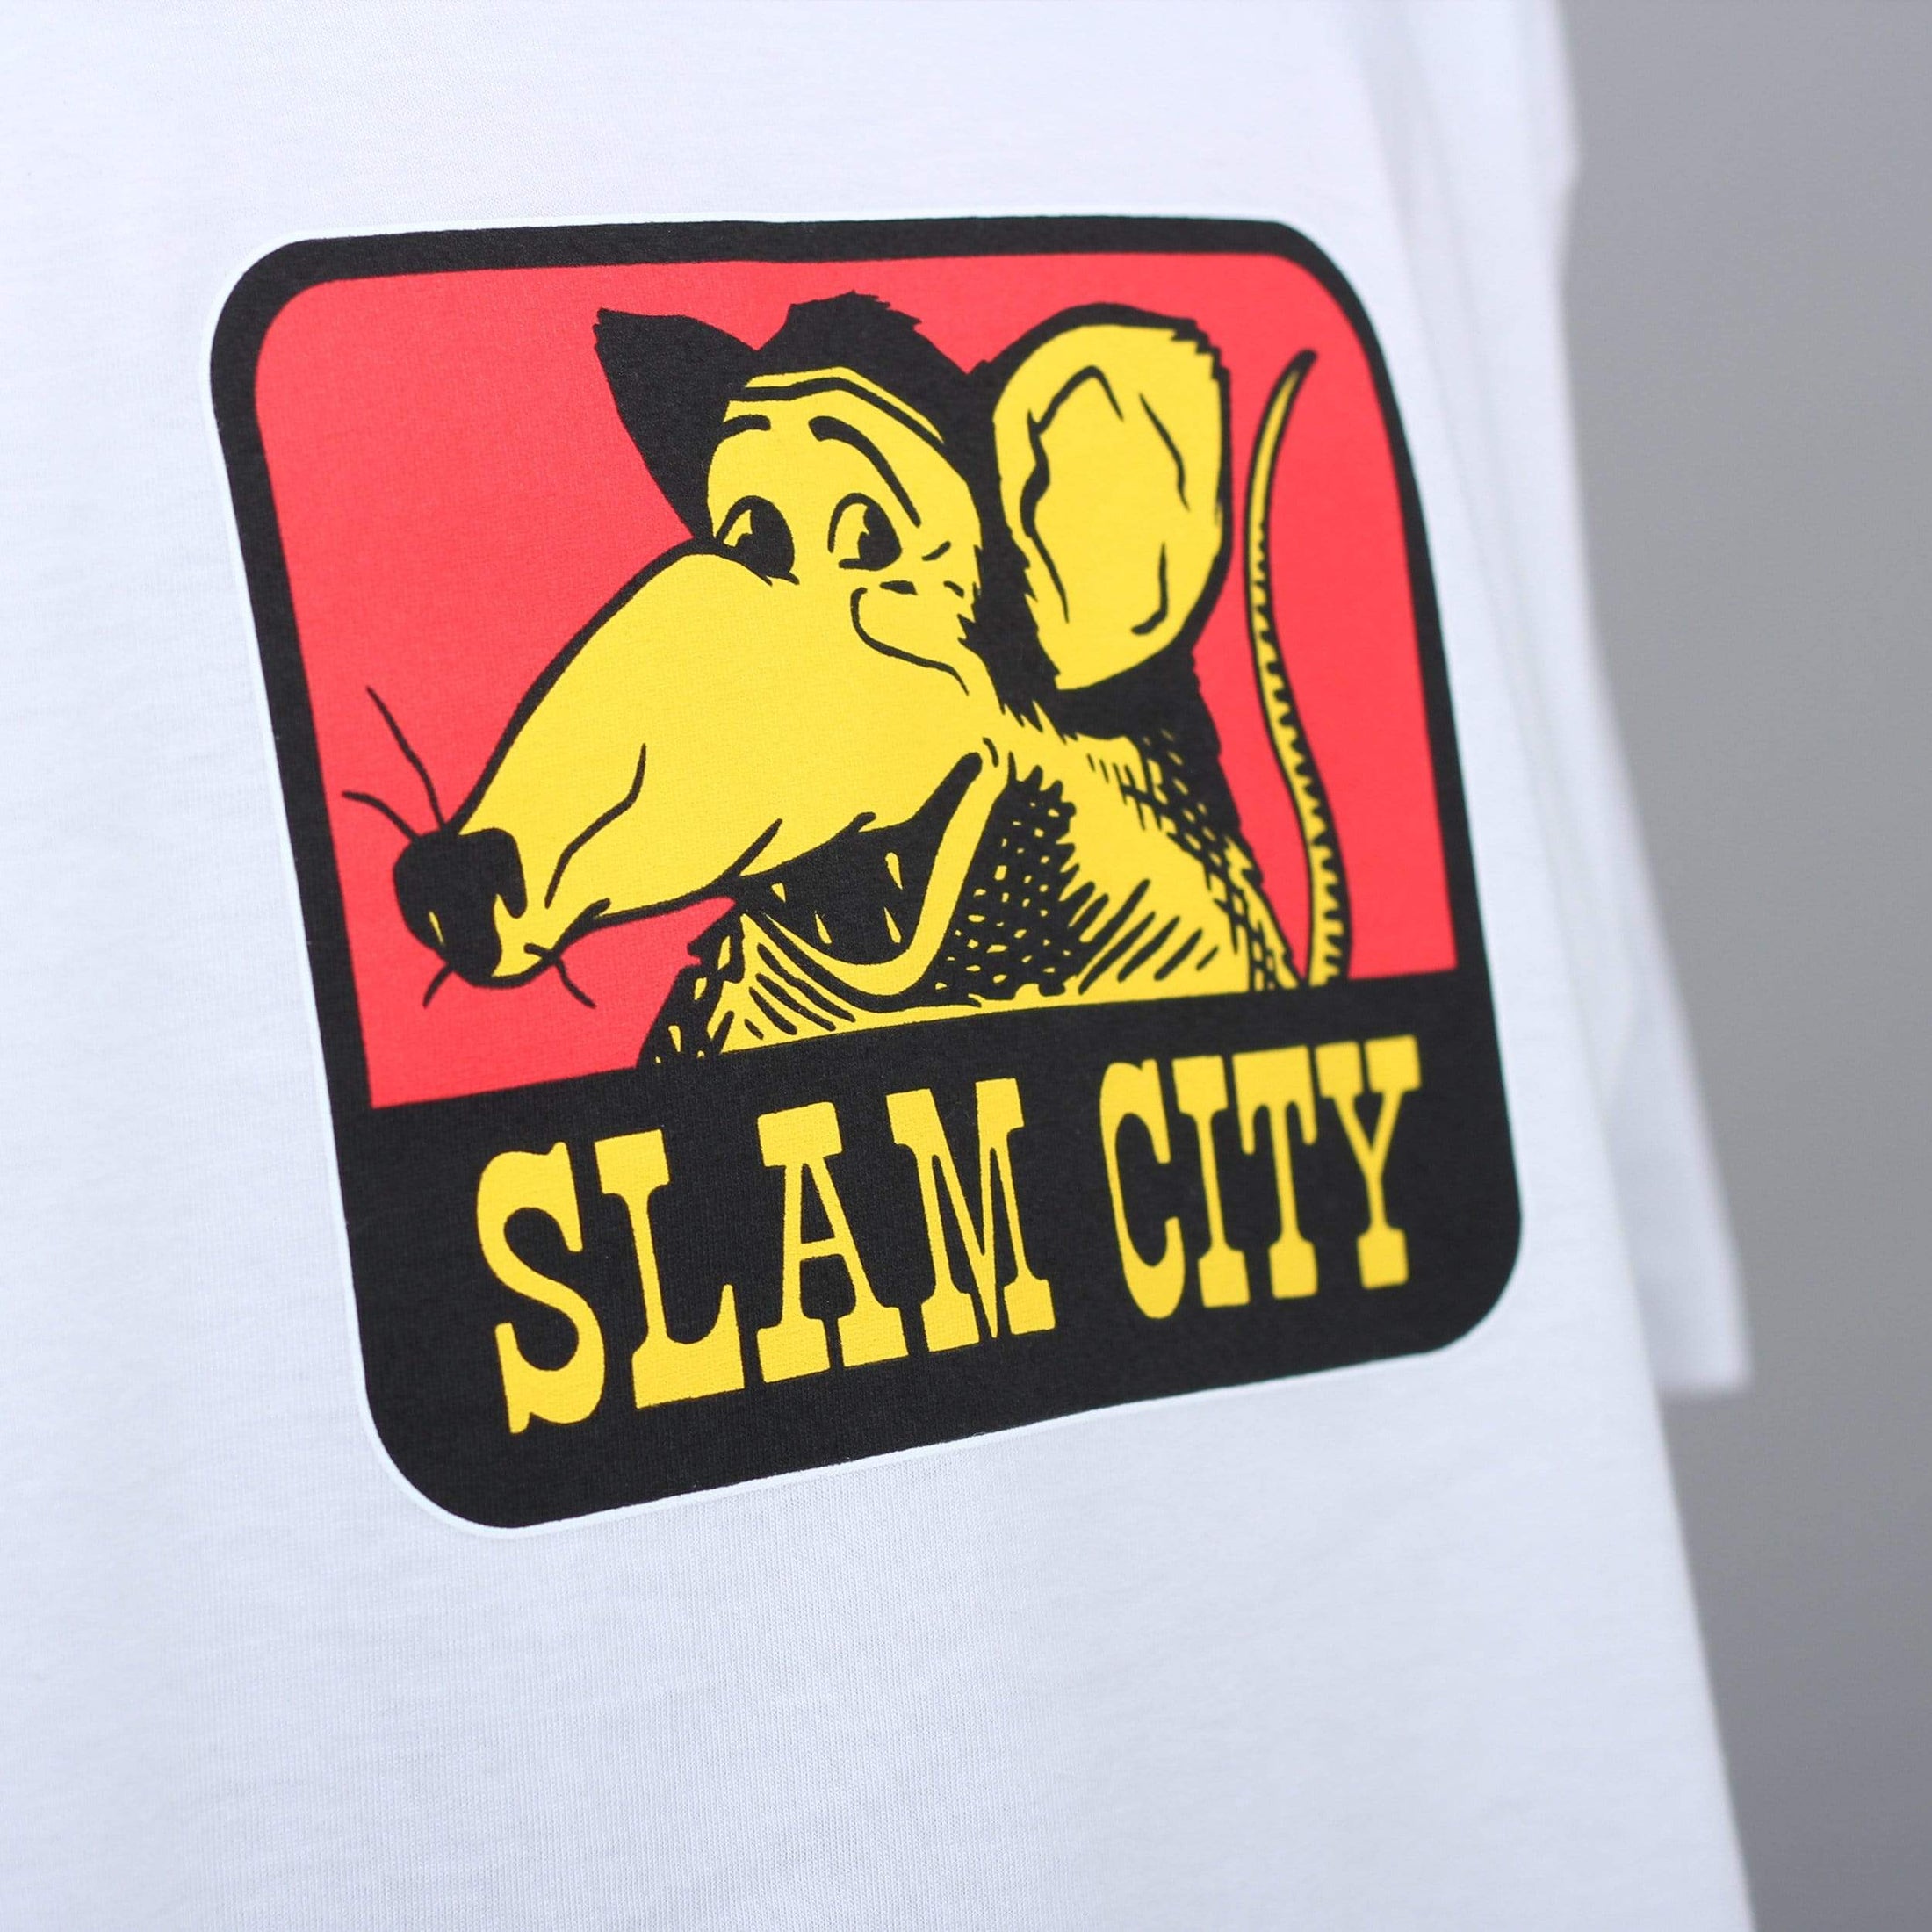 Slam City Skates Tougher T-Shirt White